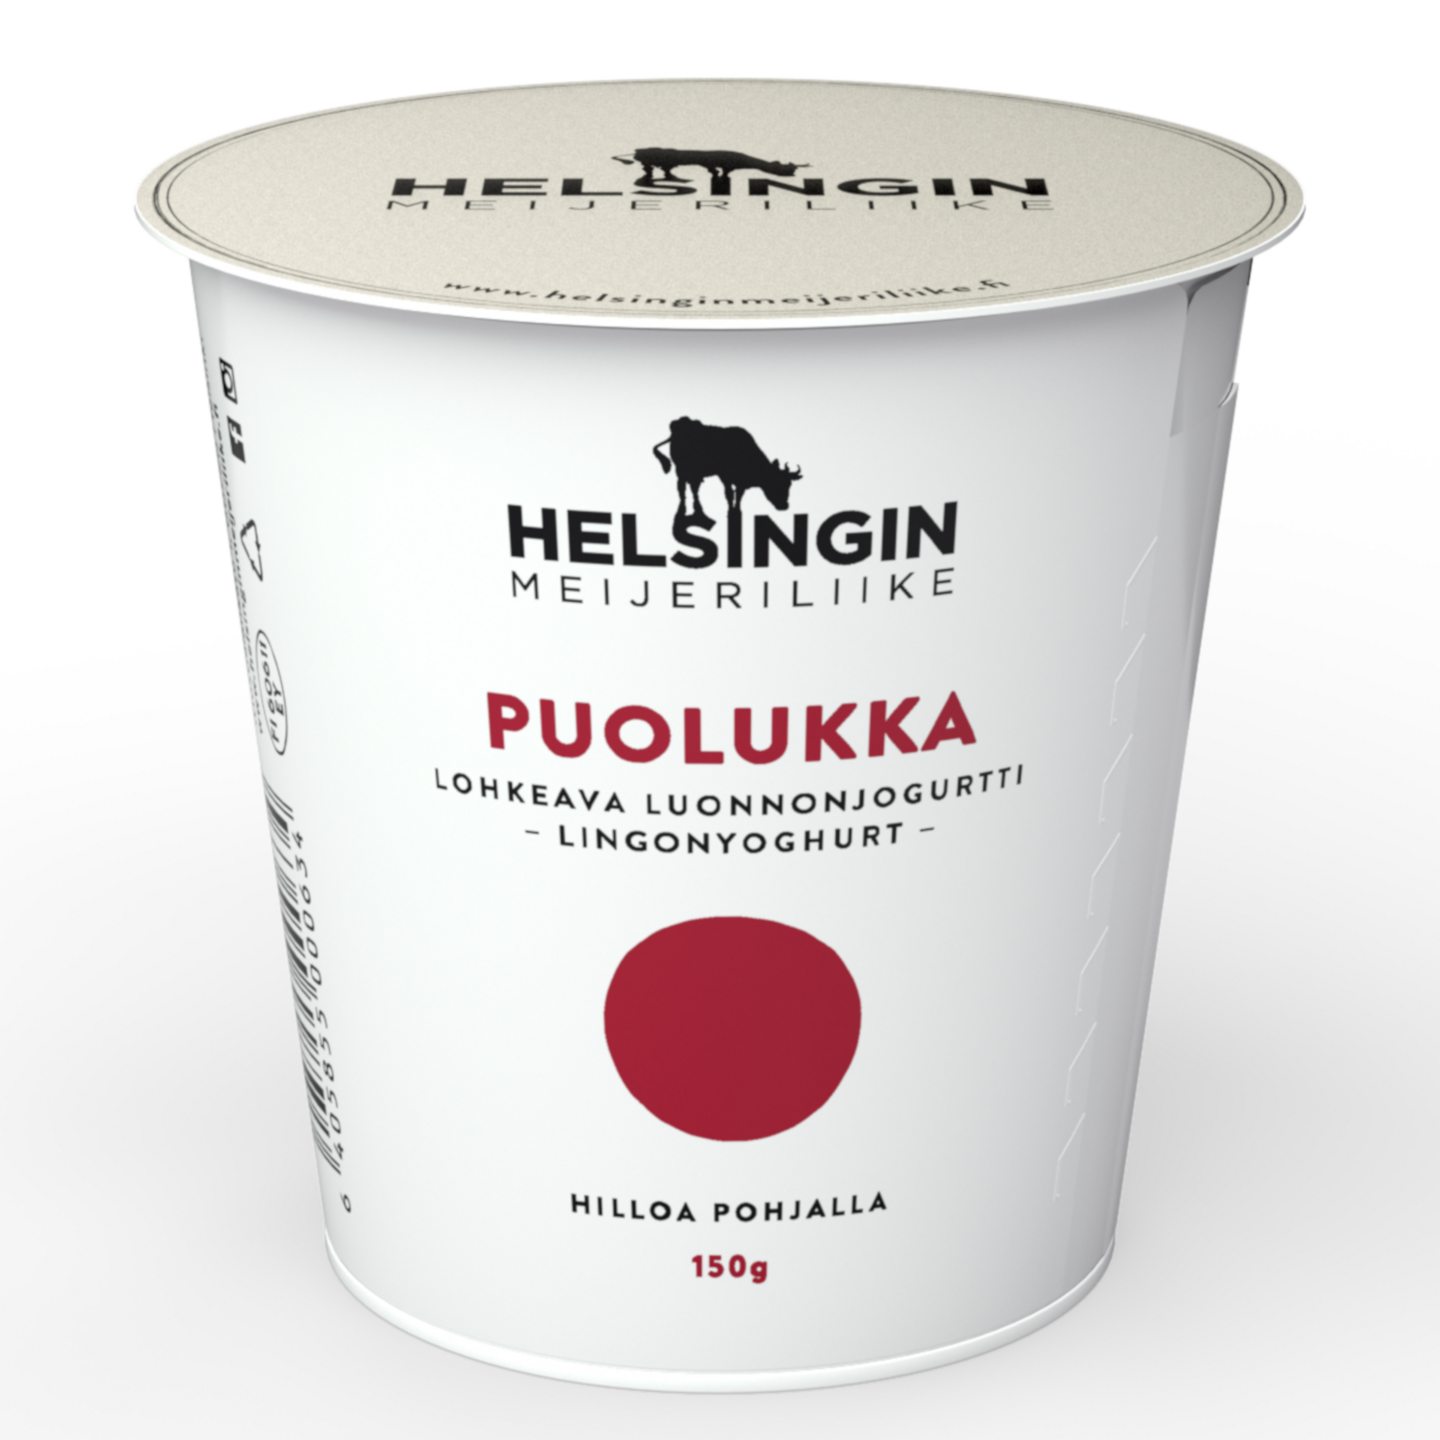 Helsingin Meijeriliike luonnonjogurtti 150g puolukka